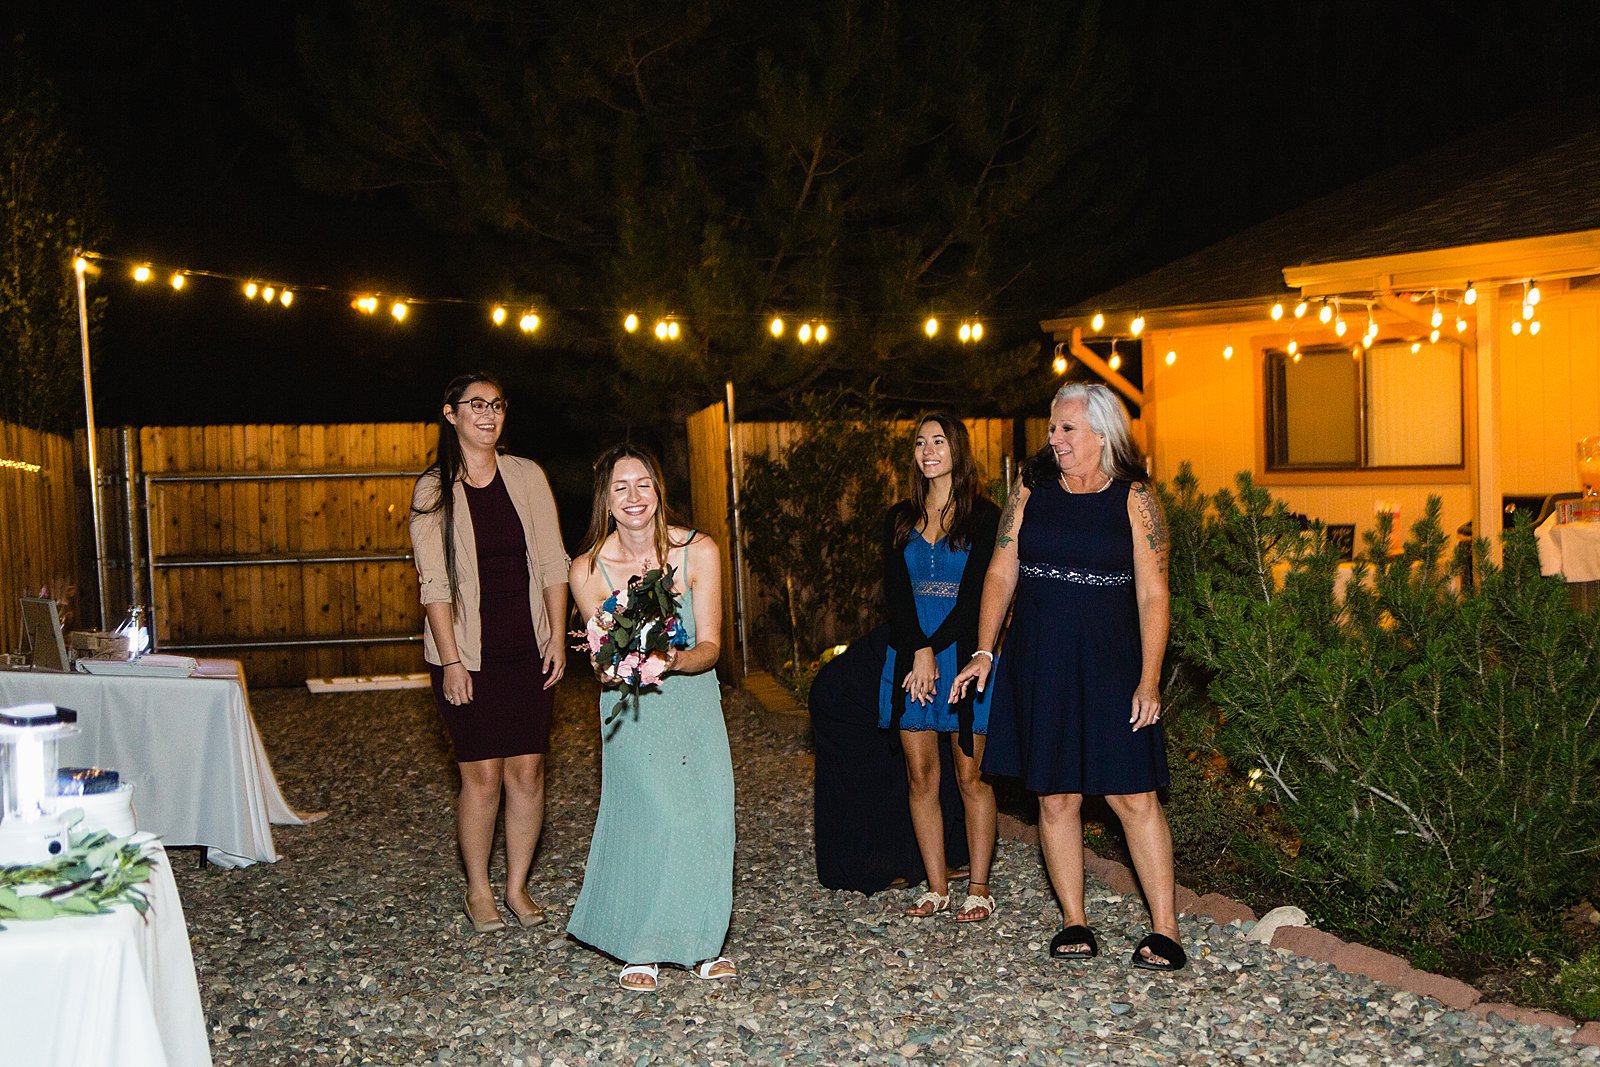 Bouquet toss at backyard wedding reception by Flagstaff wedding photographer PMA Photography.